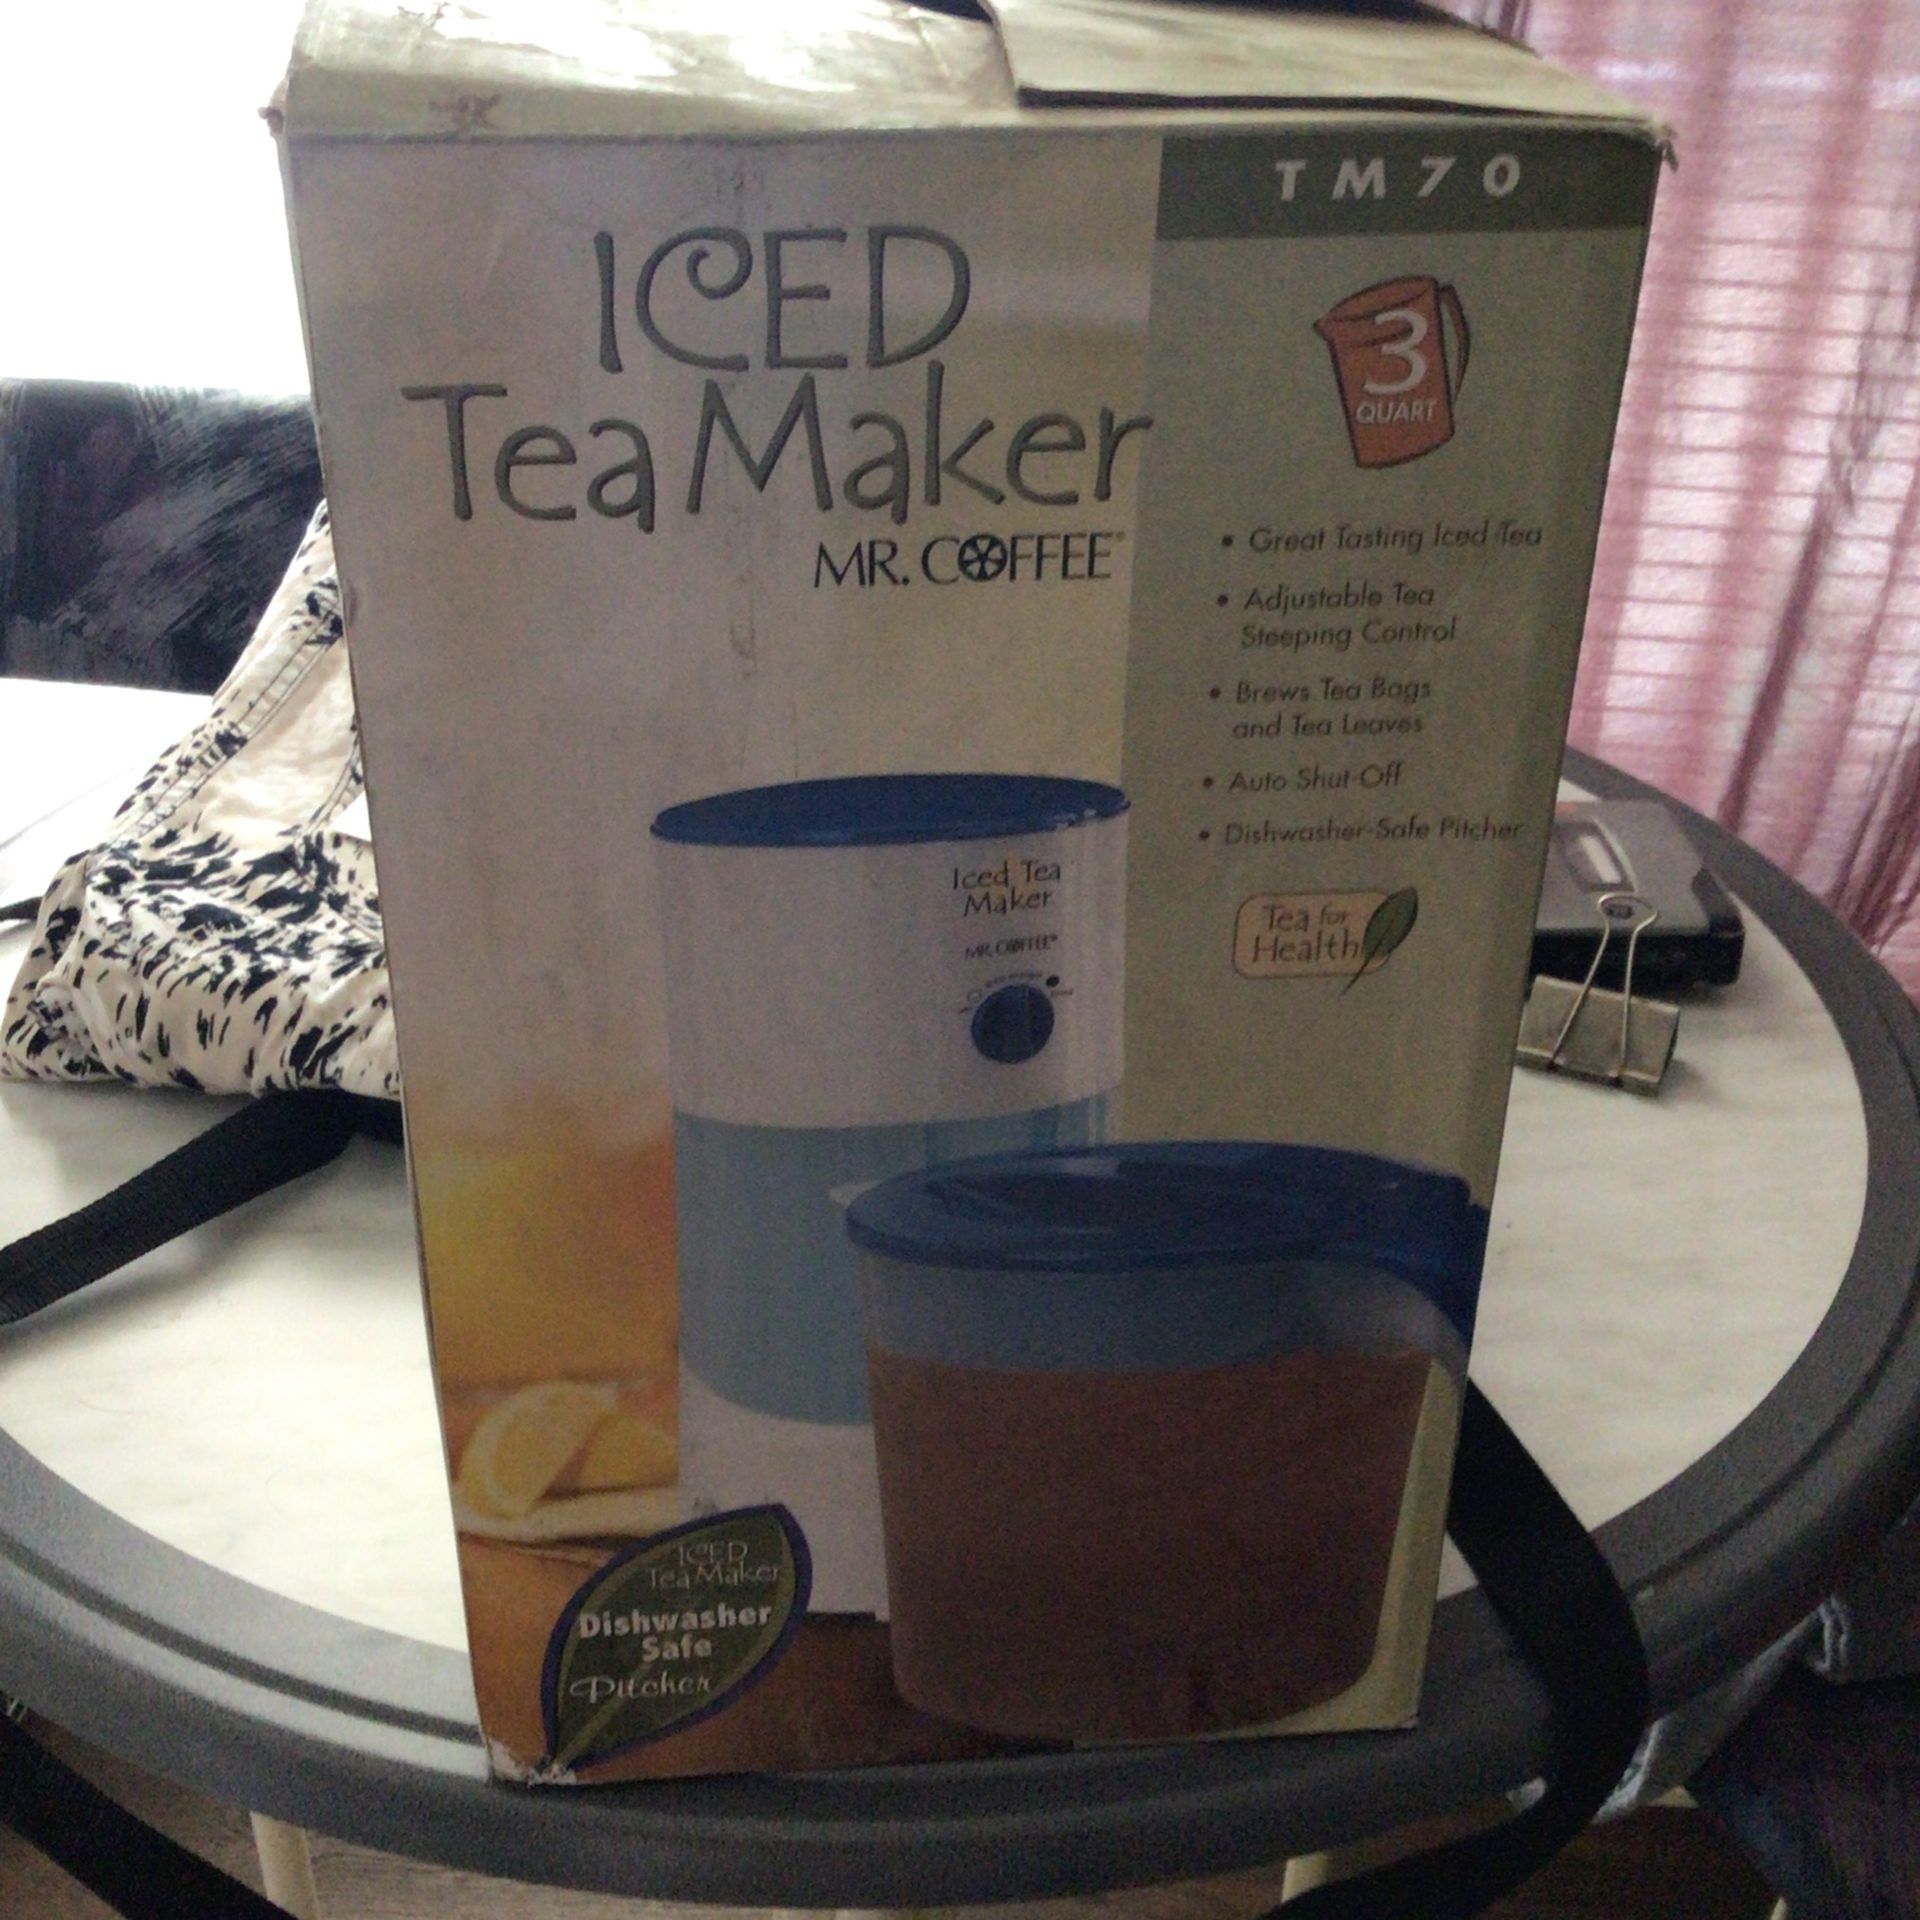 Ice, Tea Maker